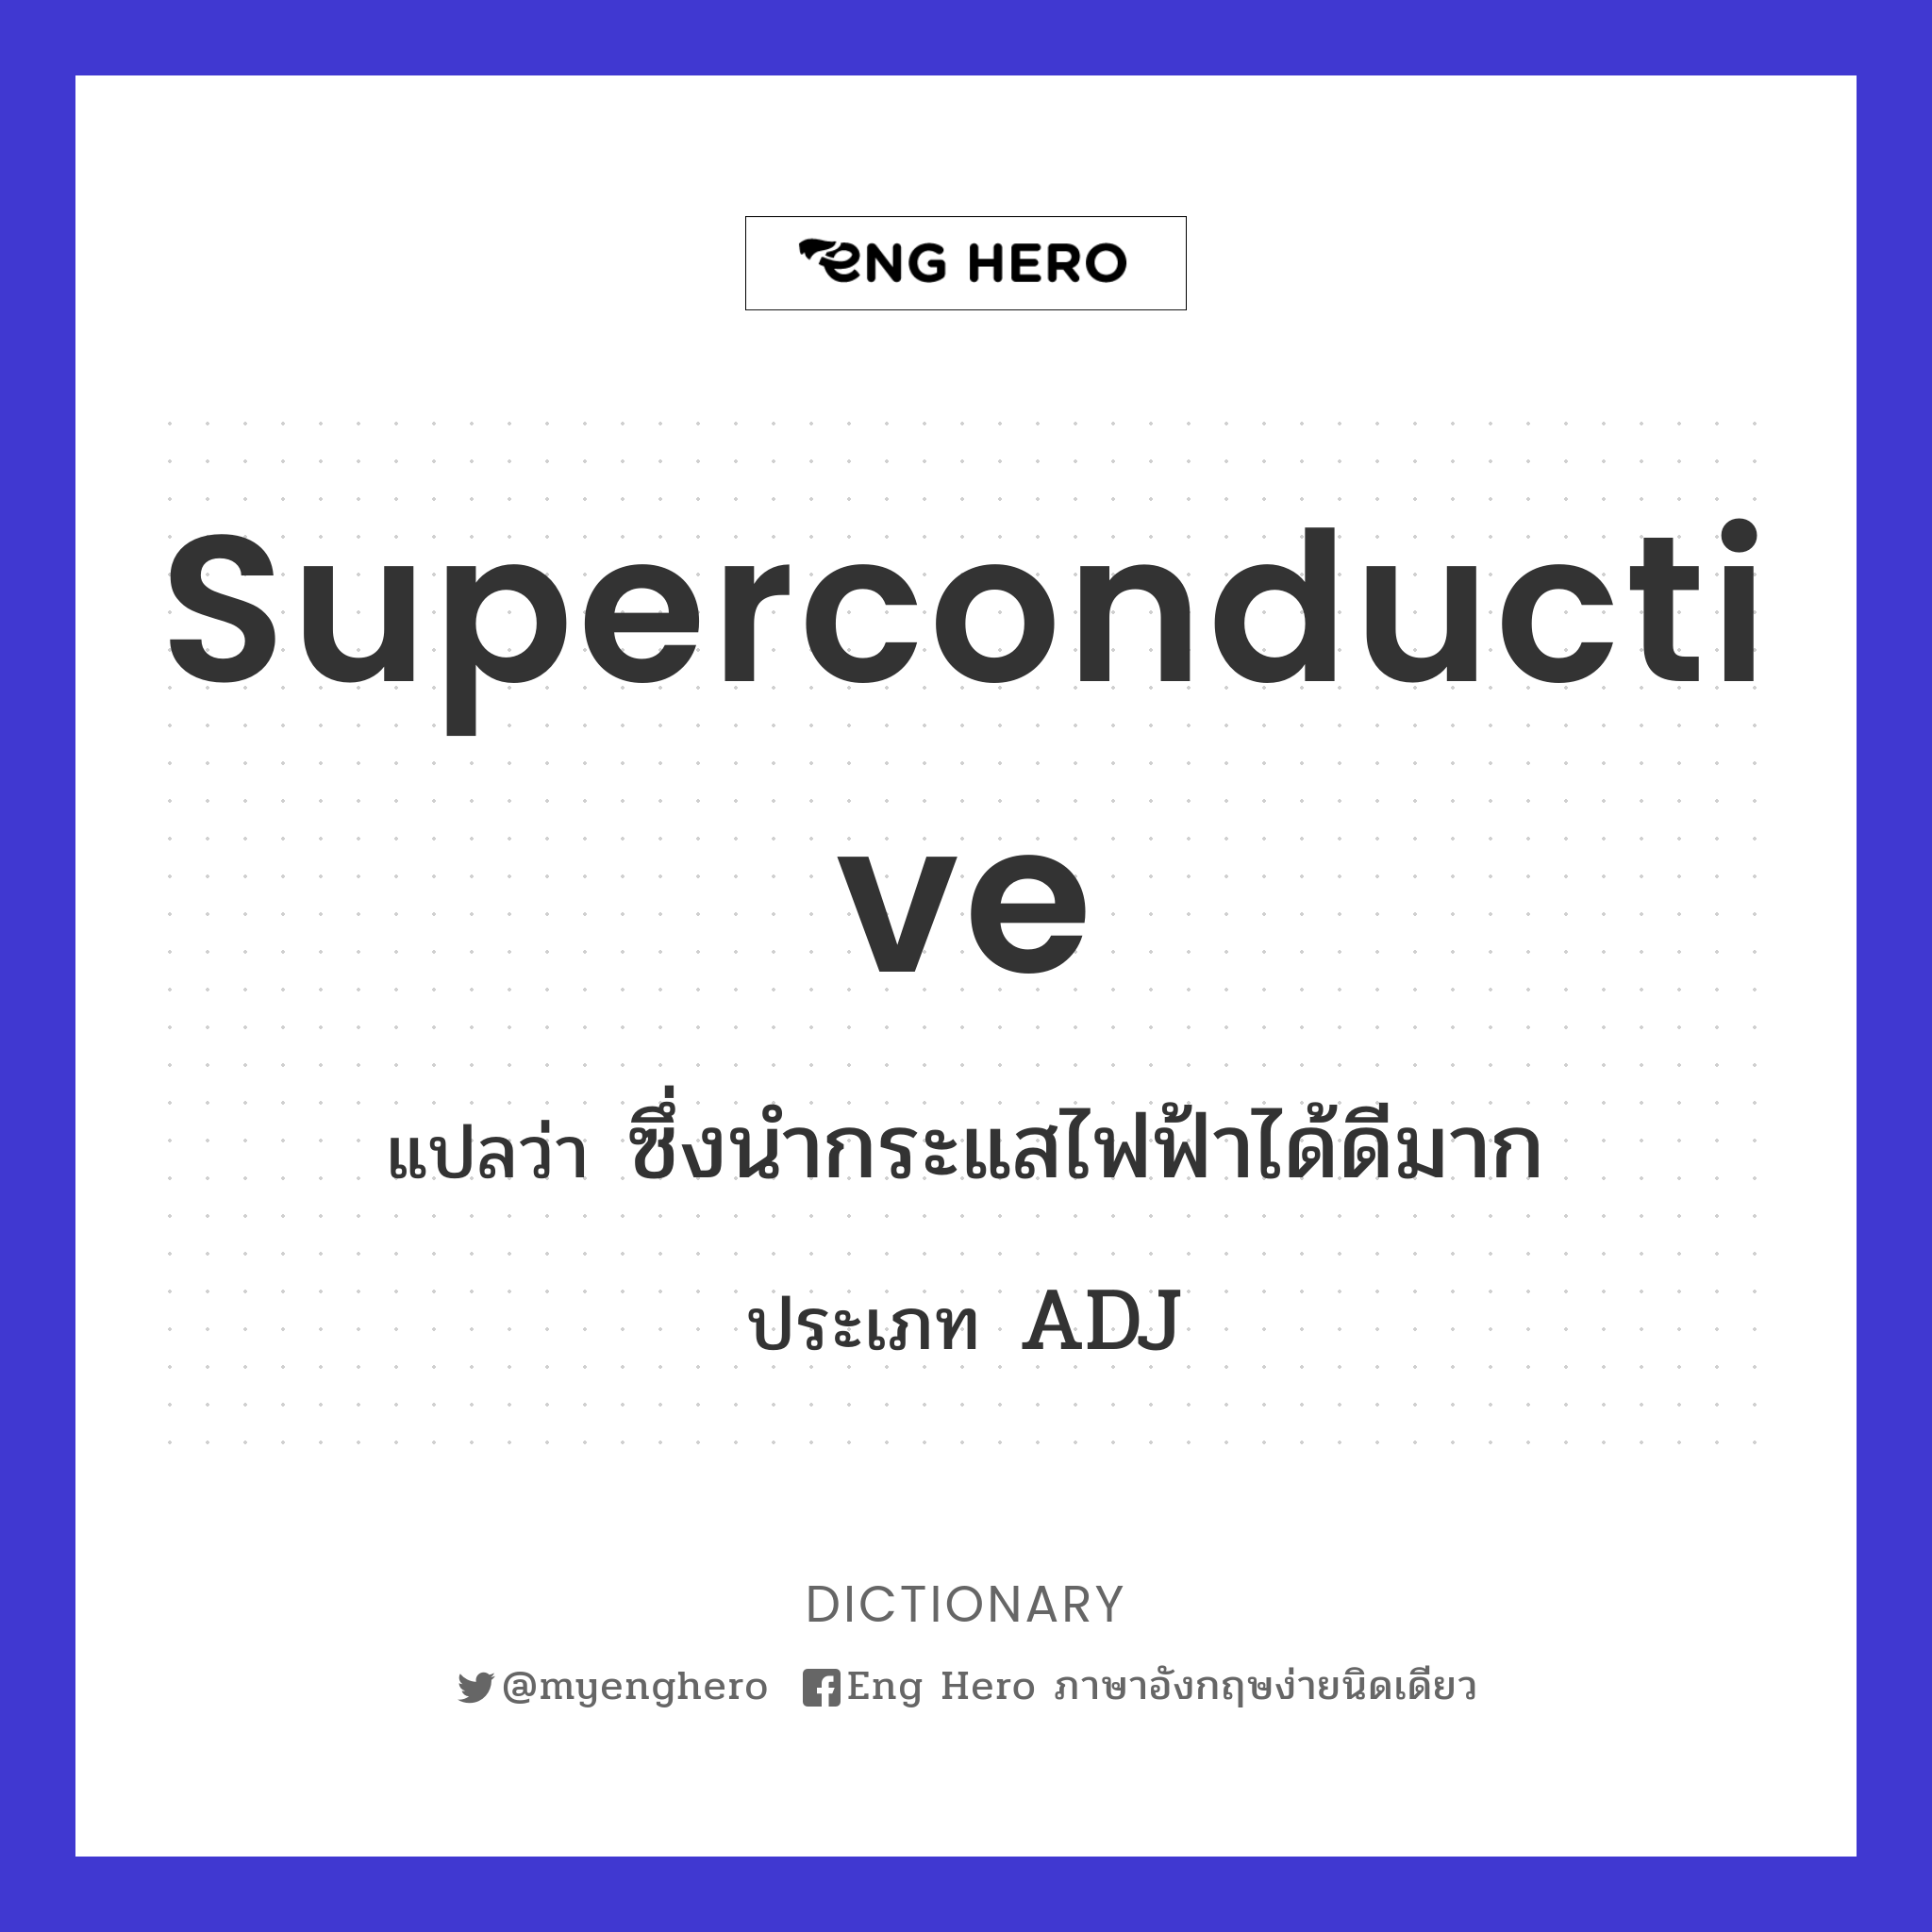 superconductive